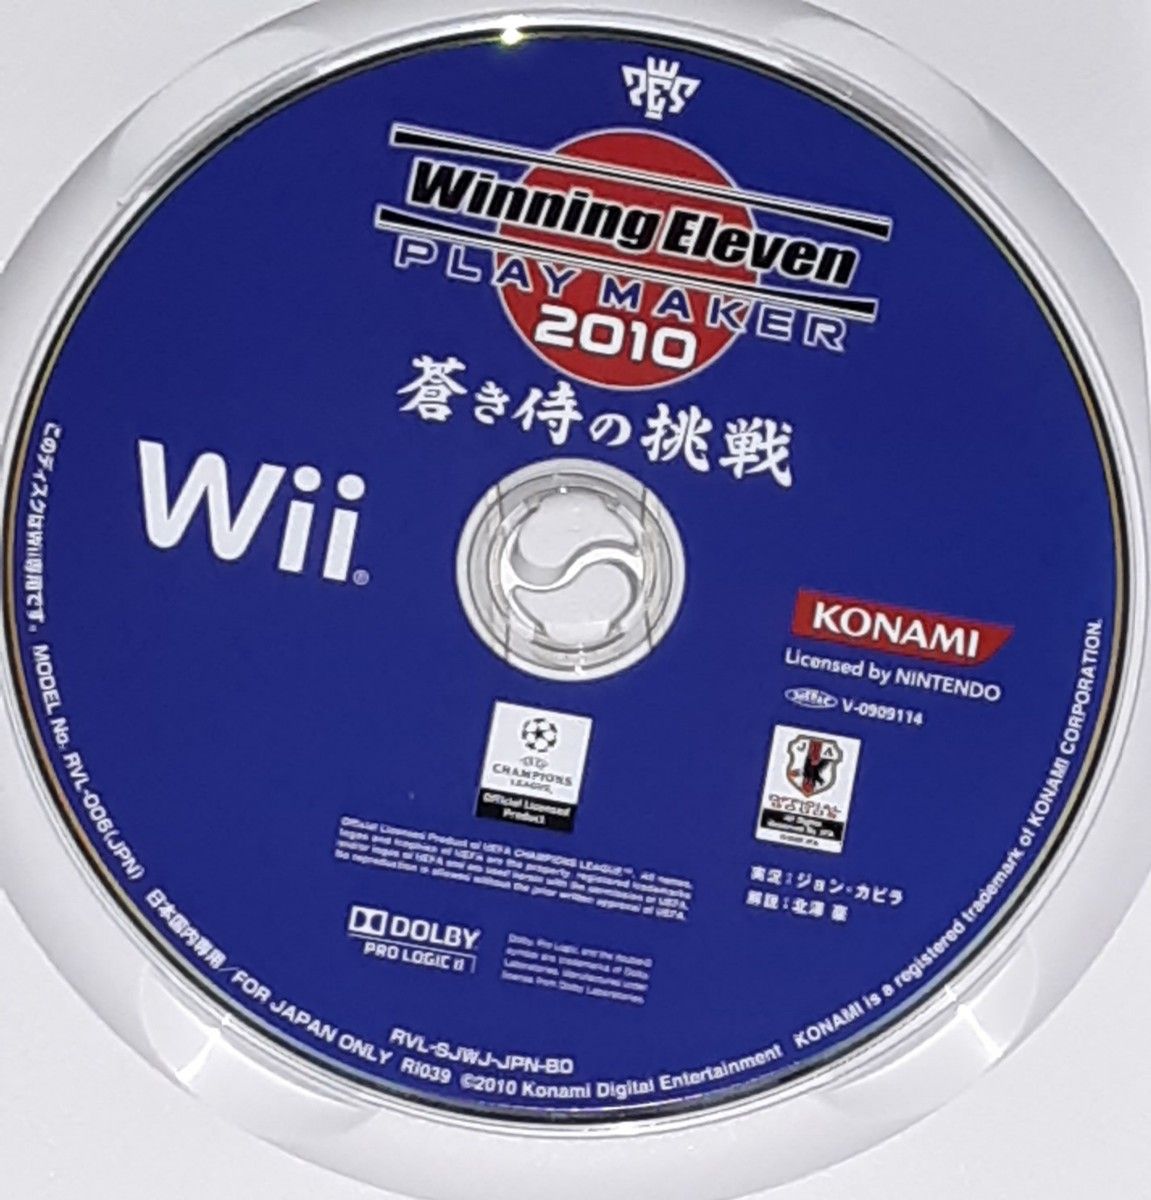 【Wii】 ウイニングイレブンプレーメーカー2010 蒼き侍の挑戦【24時間以内に配送します】送料込み/匿名配送